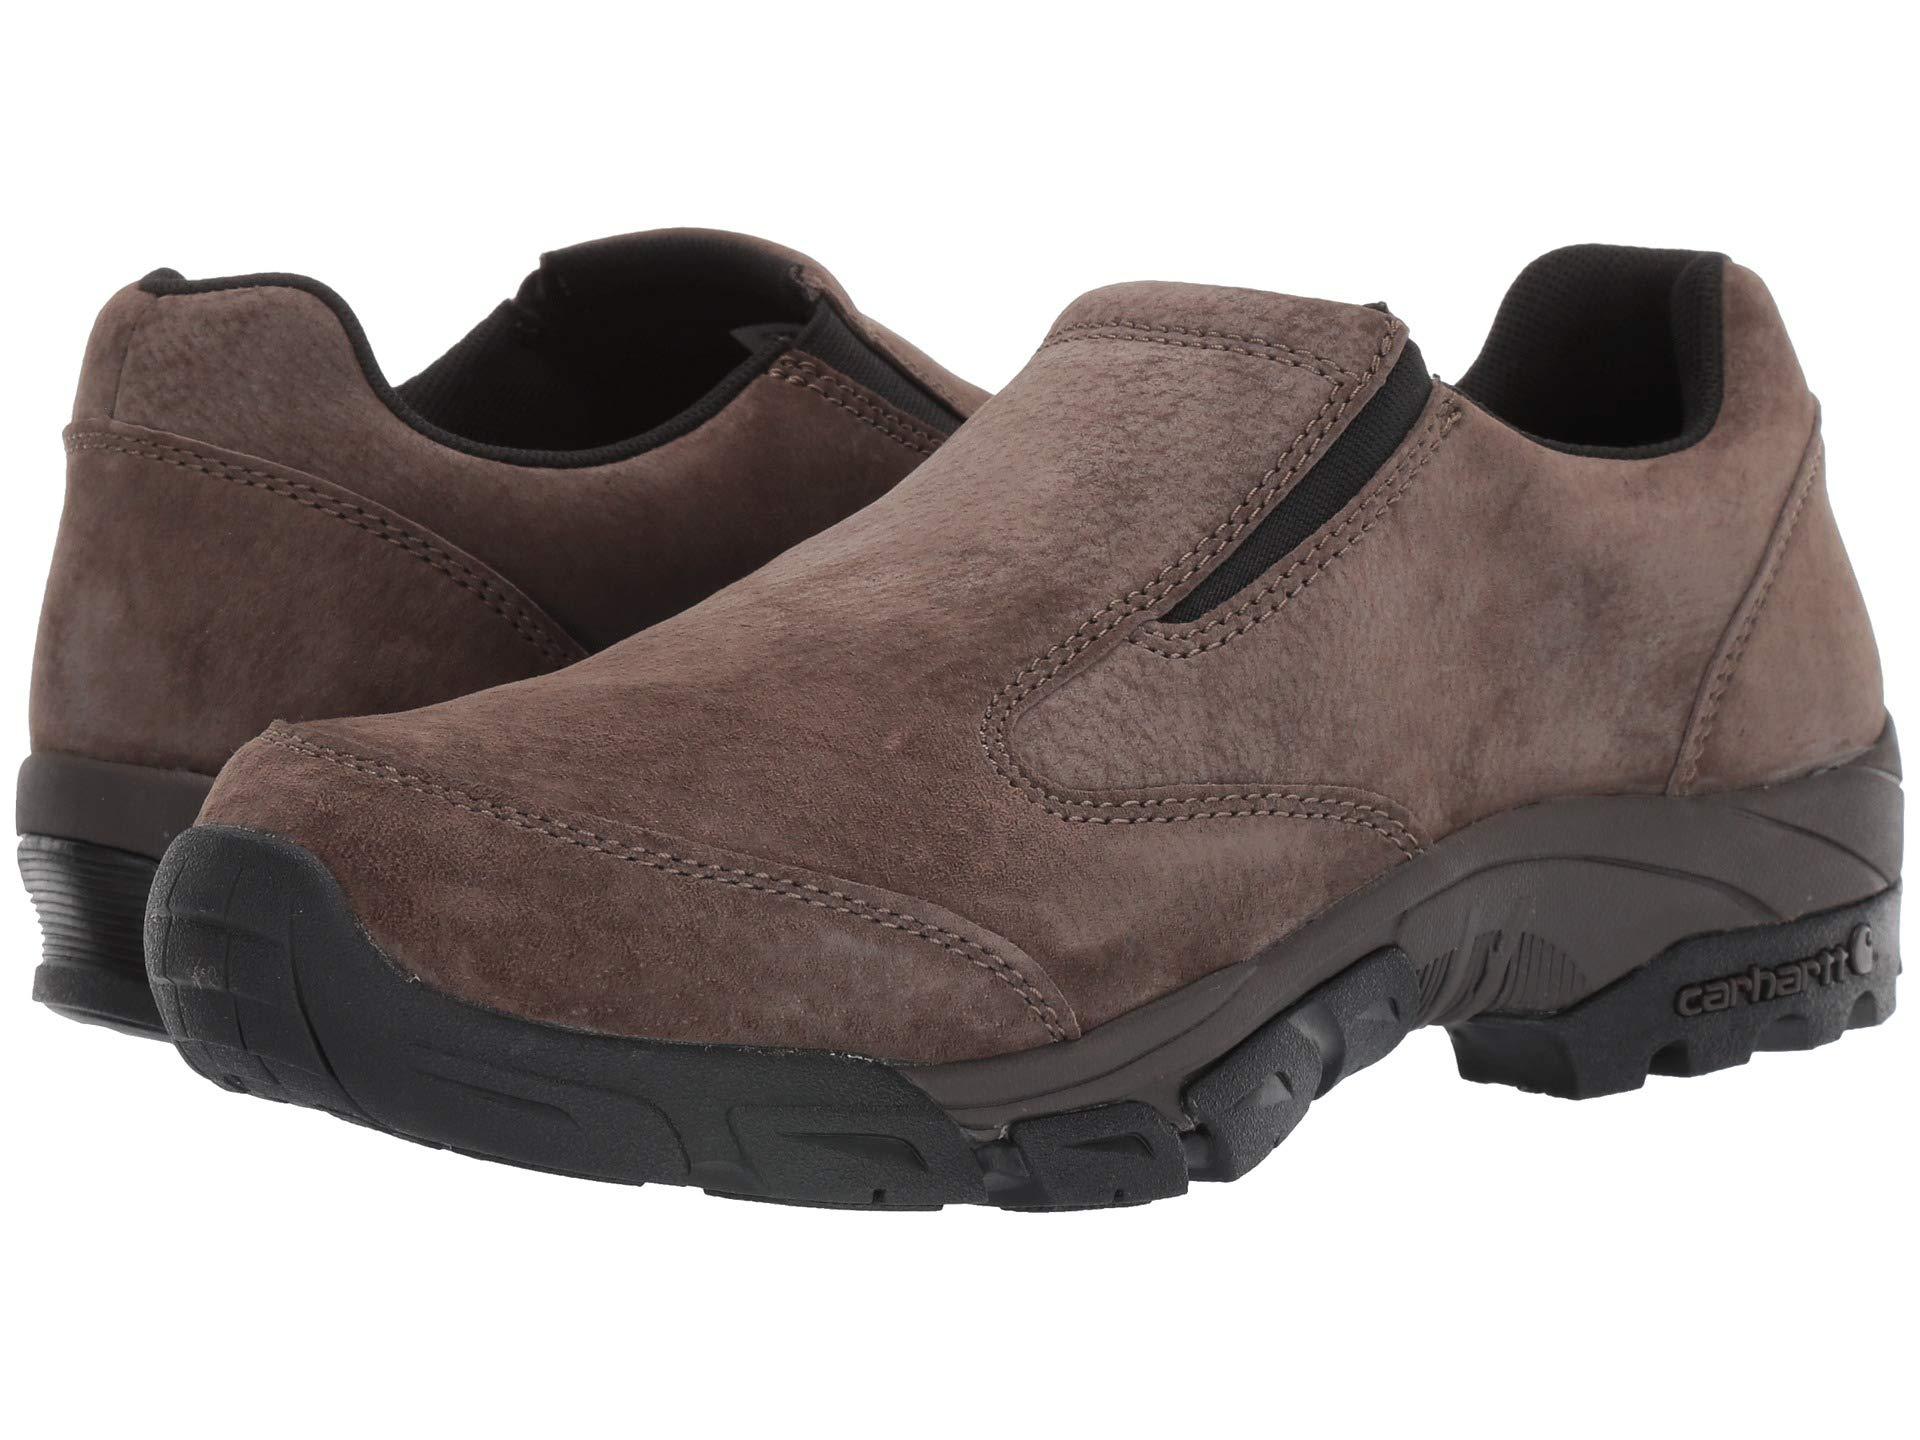 Carhartt Suede Lightweight Non-safety Toe Slip-on Work Shoe in Brown ...